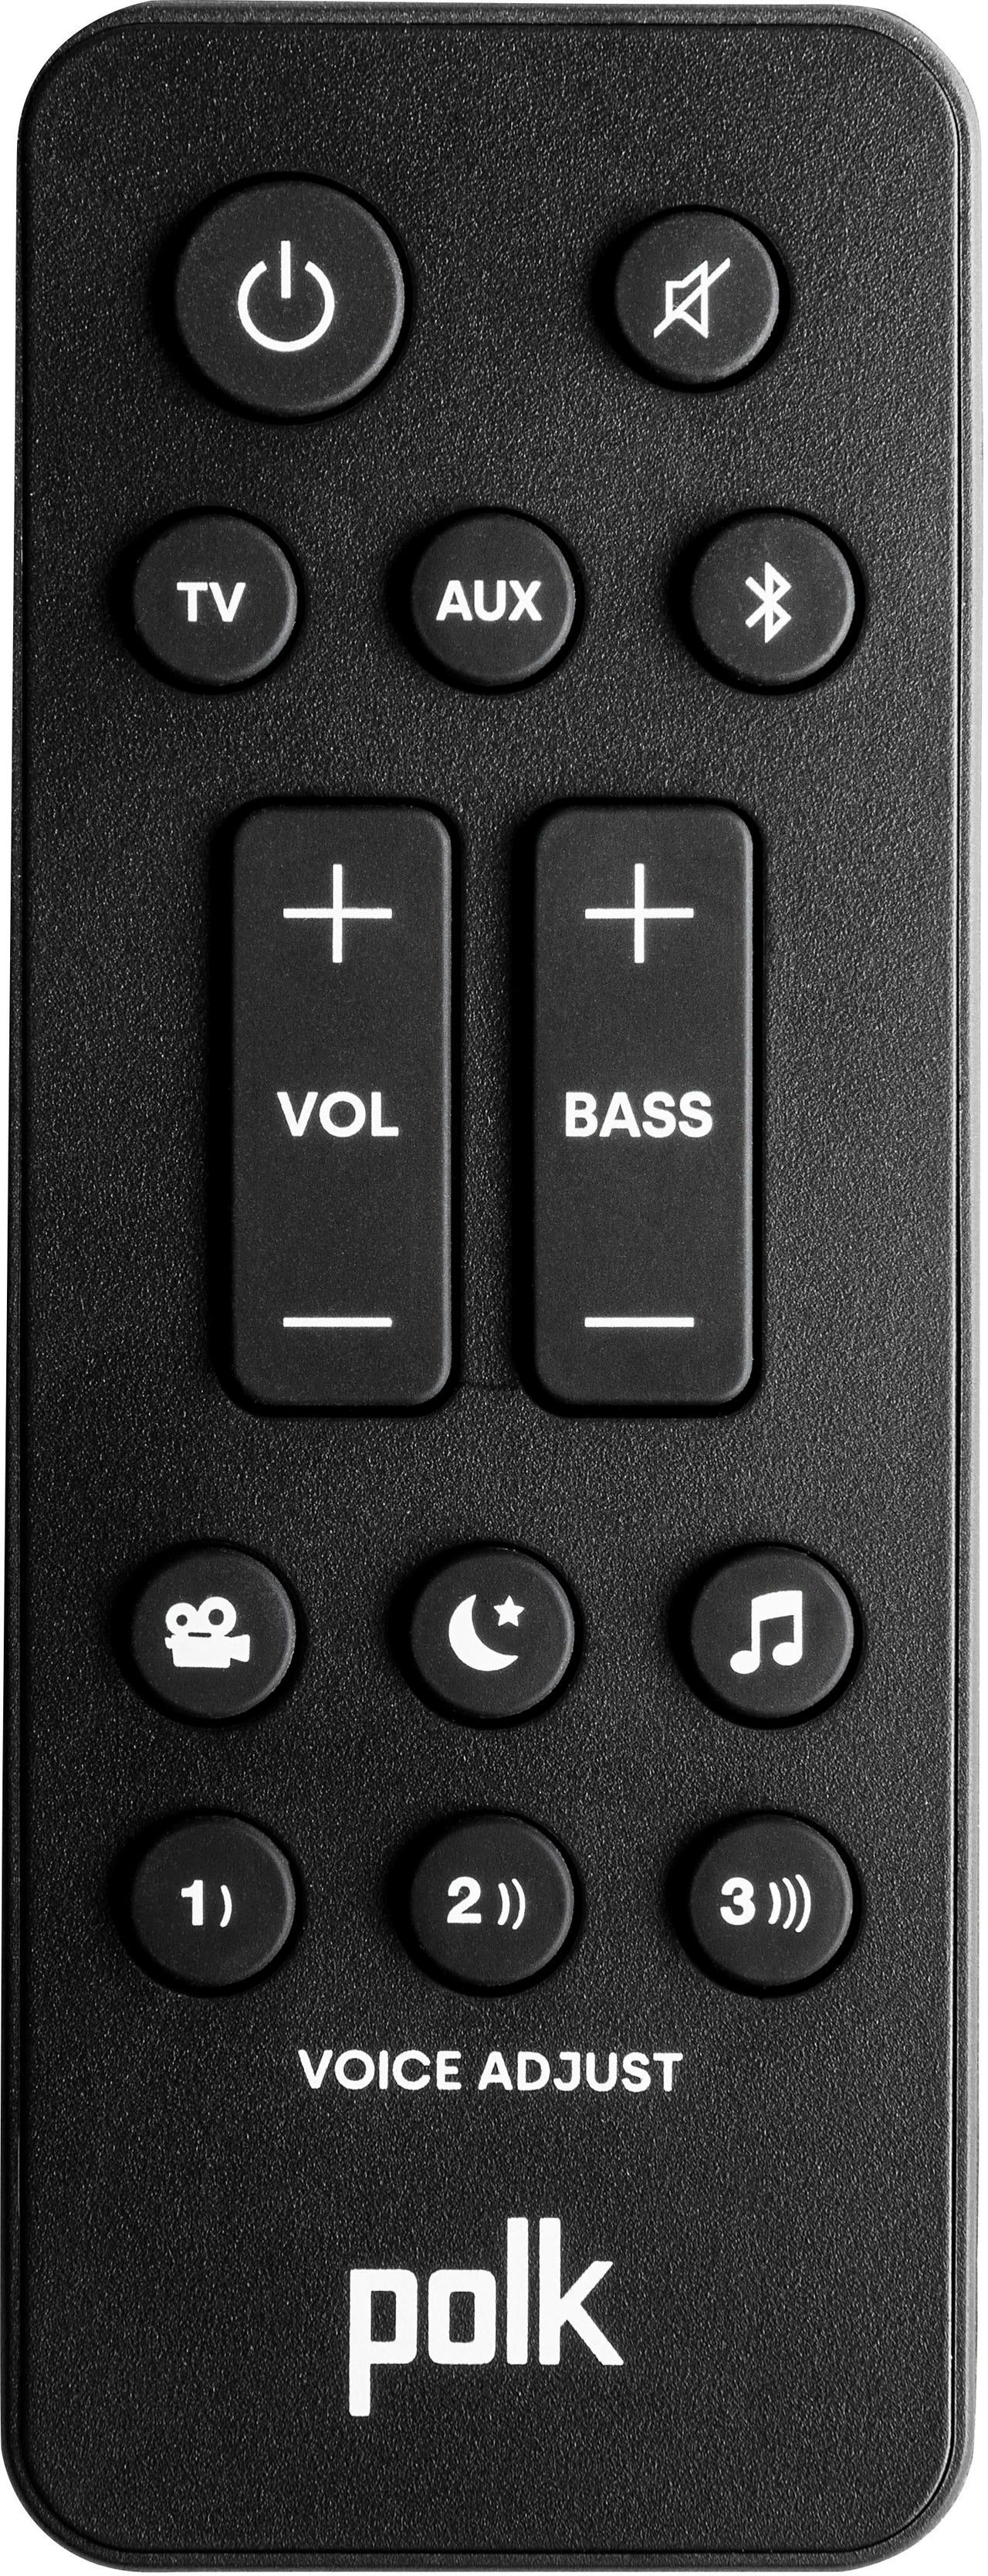 Polk Audio - Signa S4 Ultra-Slim TV Sound Bar with Wireless Subwoofer, Dolby Atmos 3D Surround Sound, Works with 8K, 4K & HD TVs - Black